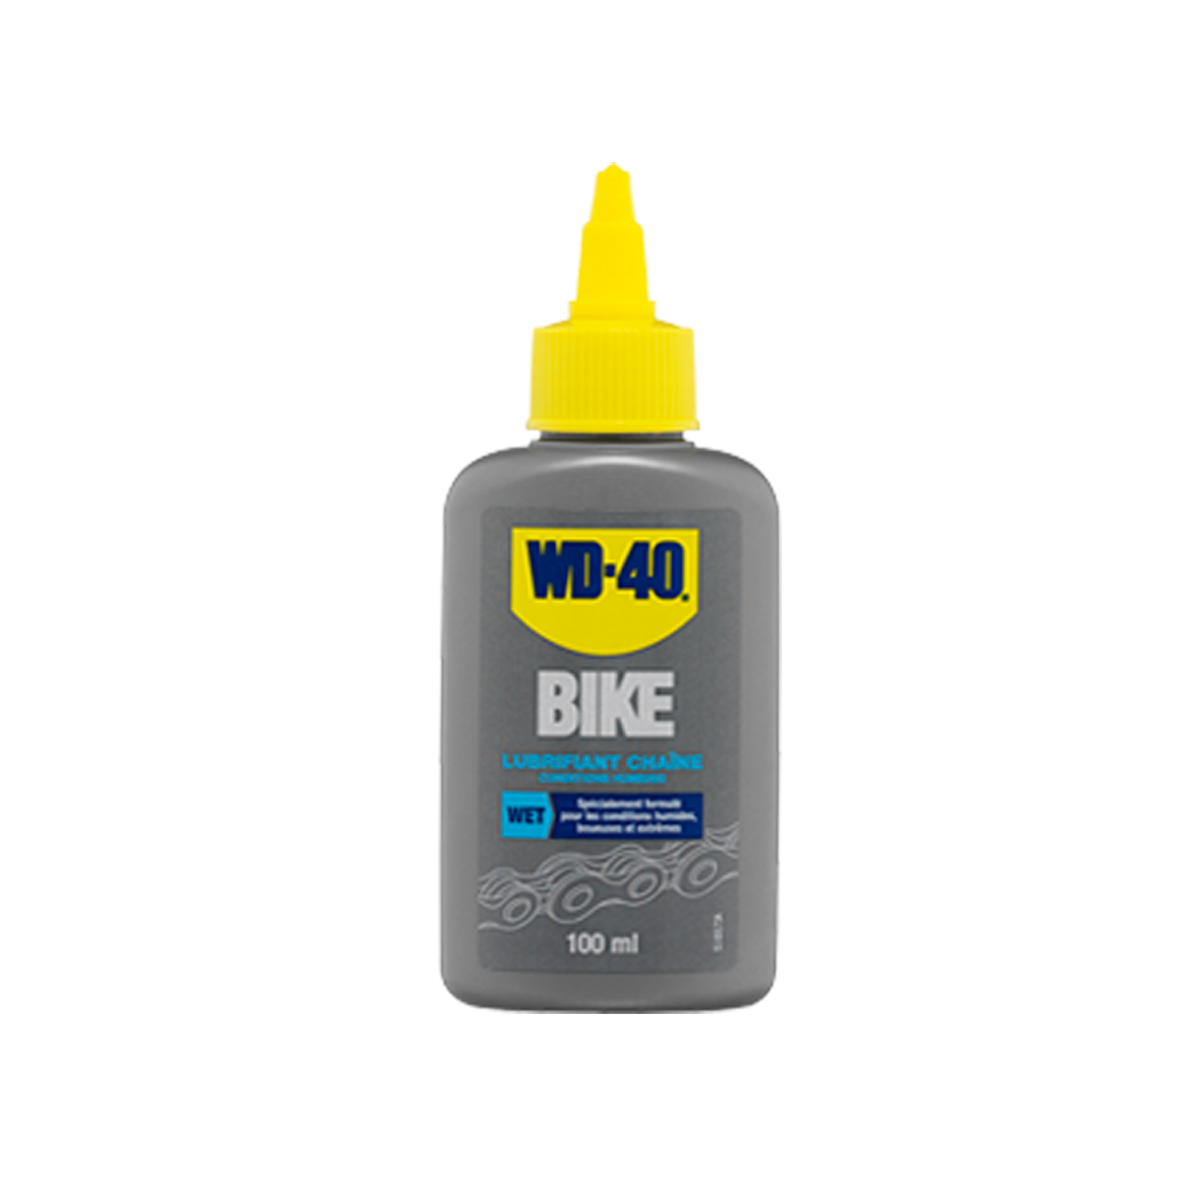 WD-40 Bike aceite lubricante cadenas bicicletas, ambiente húmedo - Gotero  100 ml